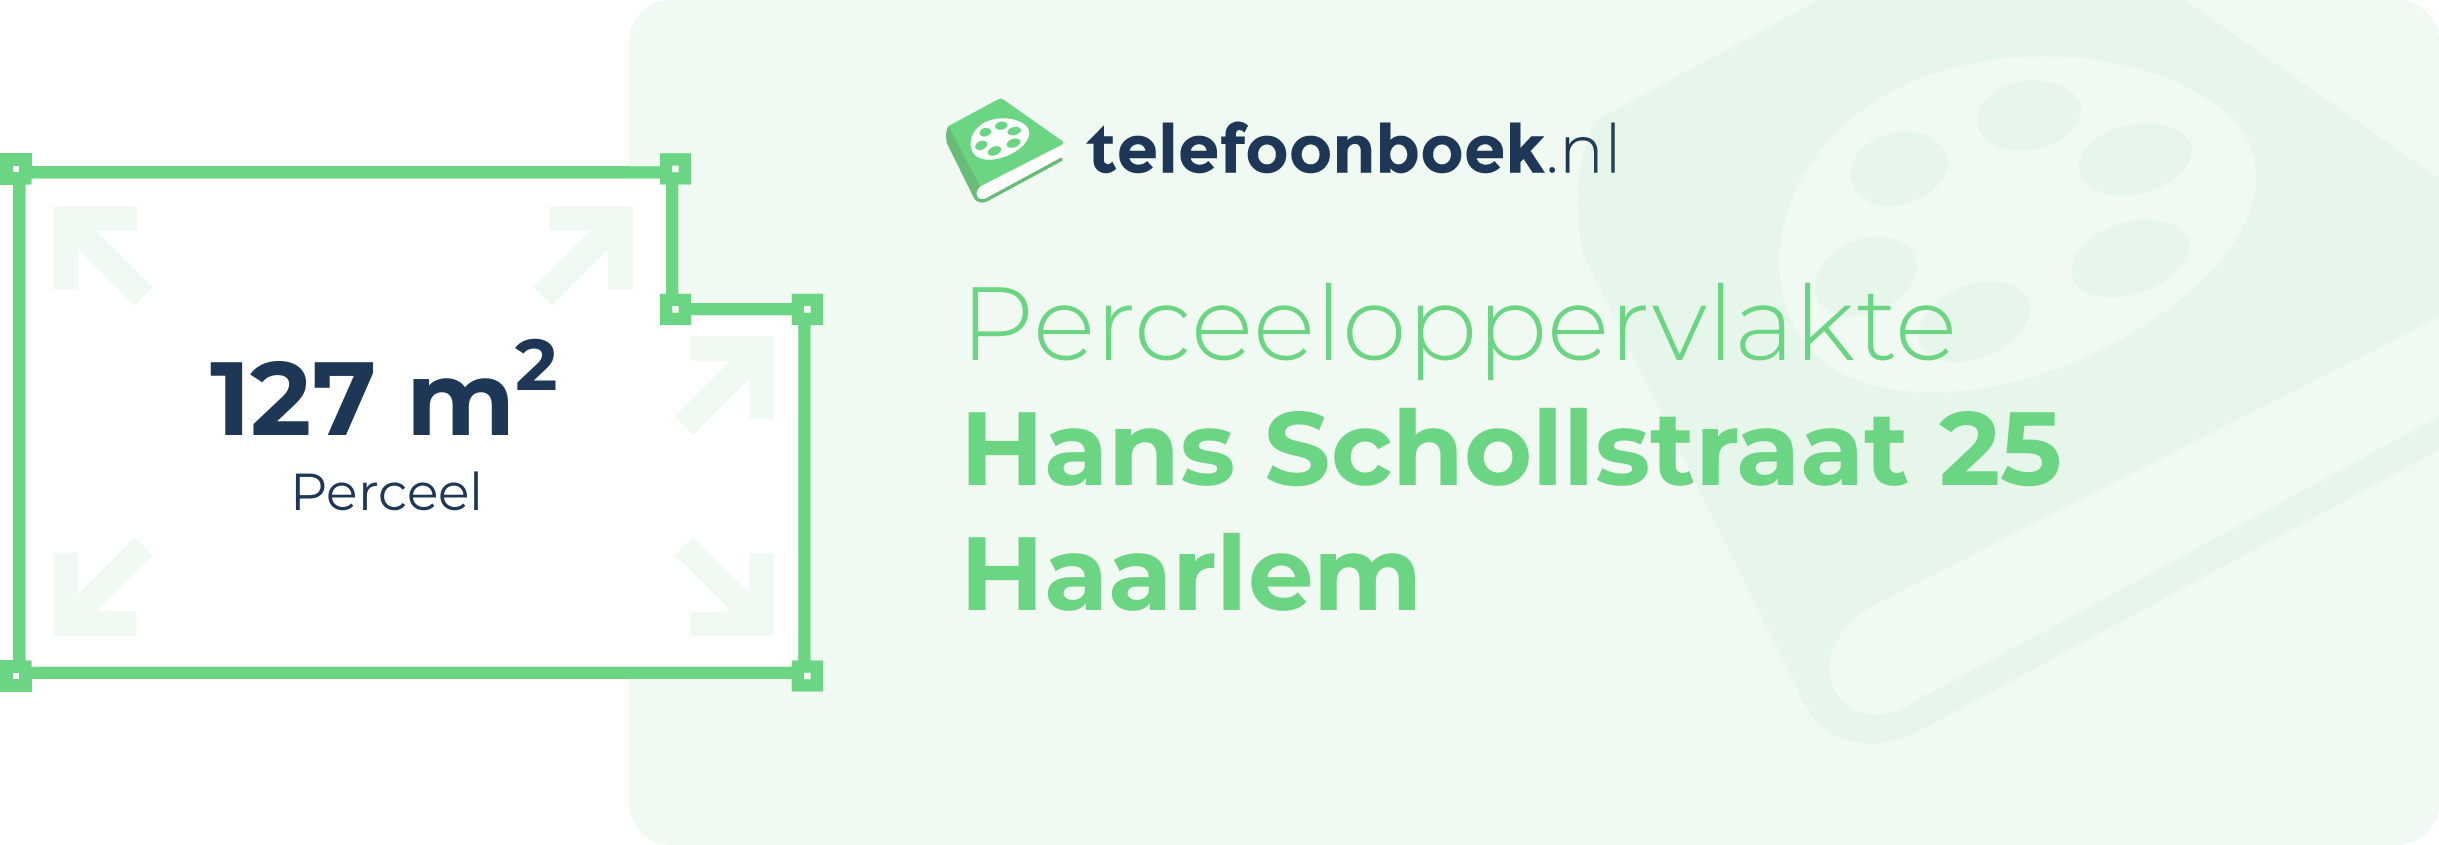 Perceeloppervlakte Hans Schollstraat 25 Haarlem